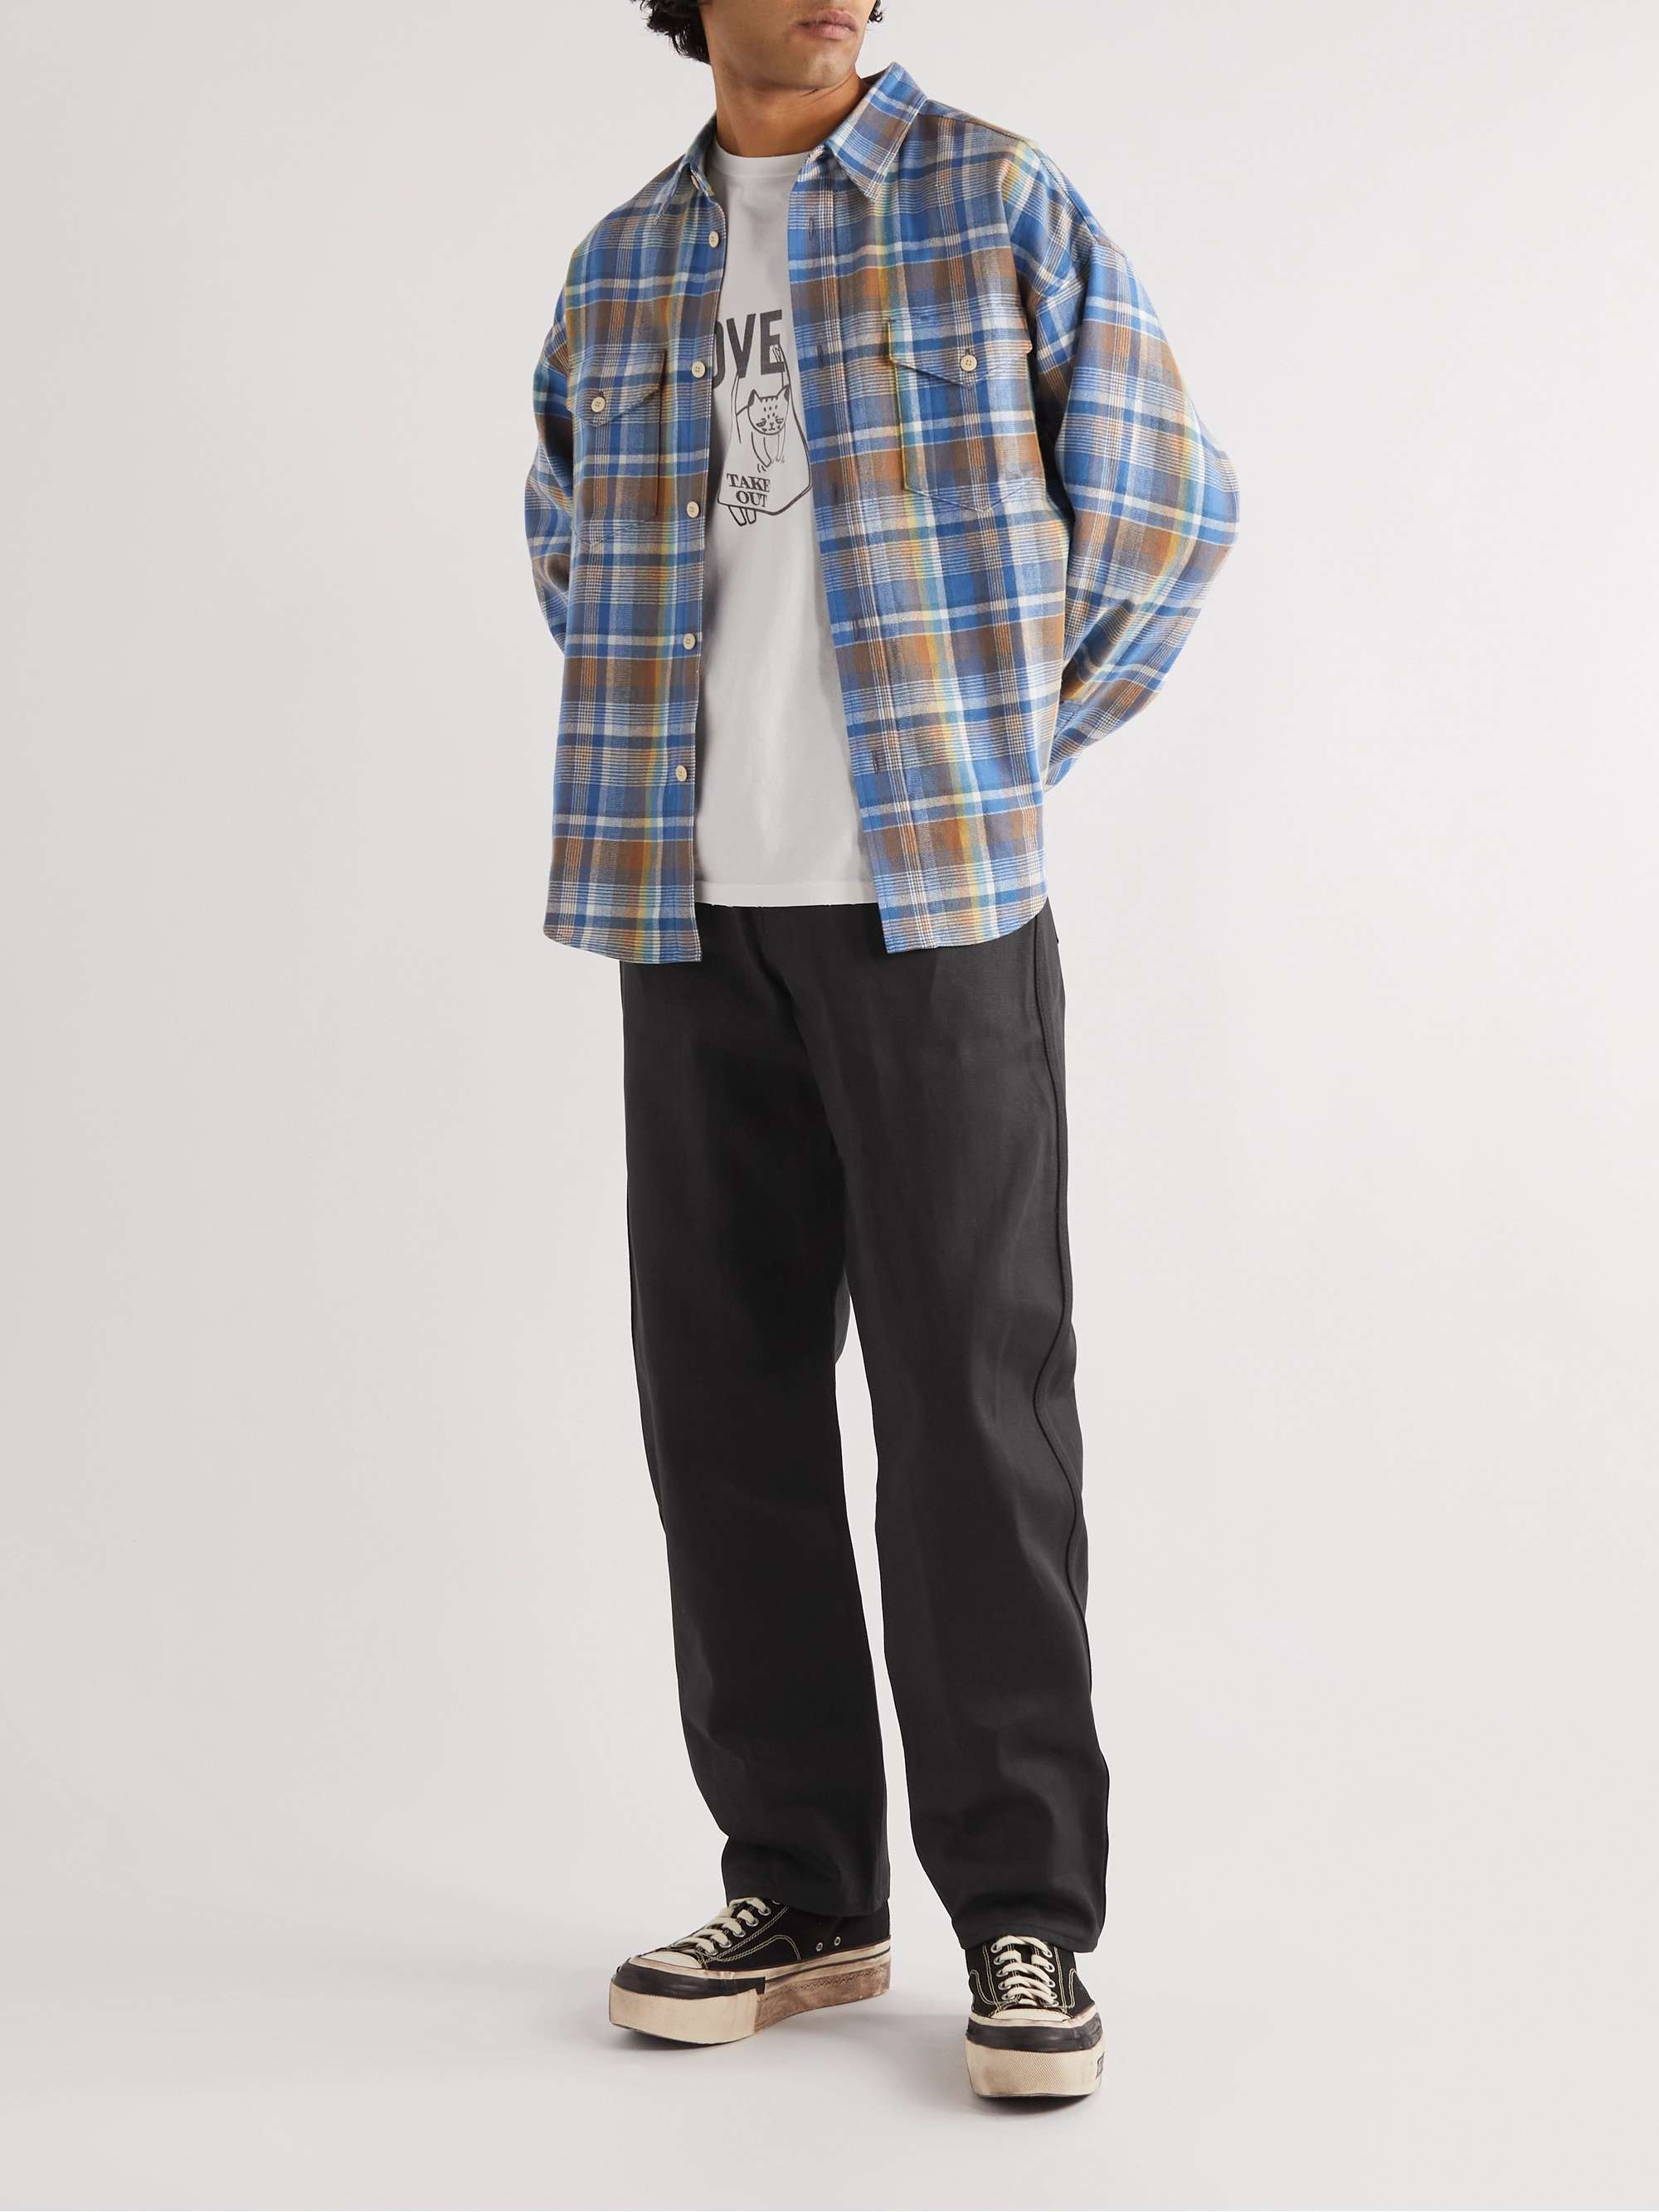 VISVIM Frontier Checked Wool and Linen-Blend Flannel Shirt for Men 